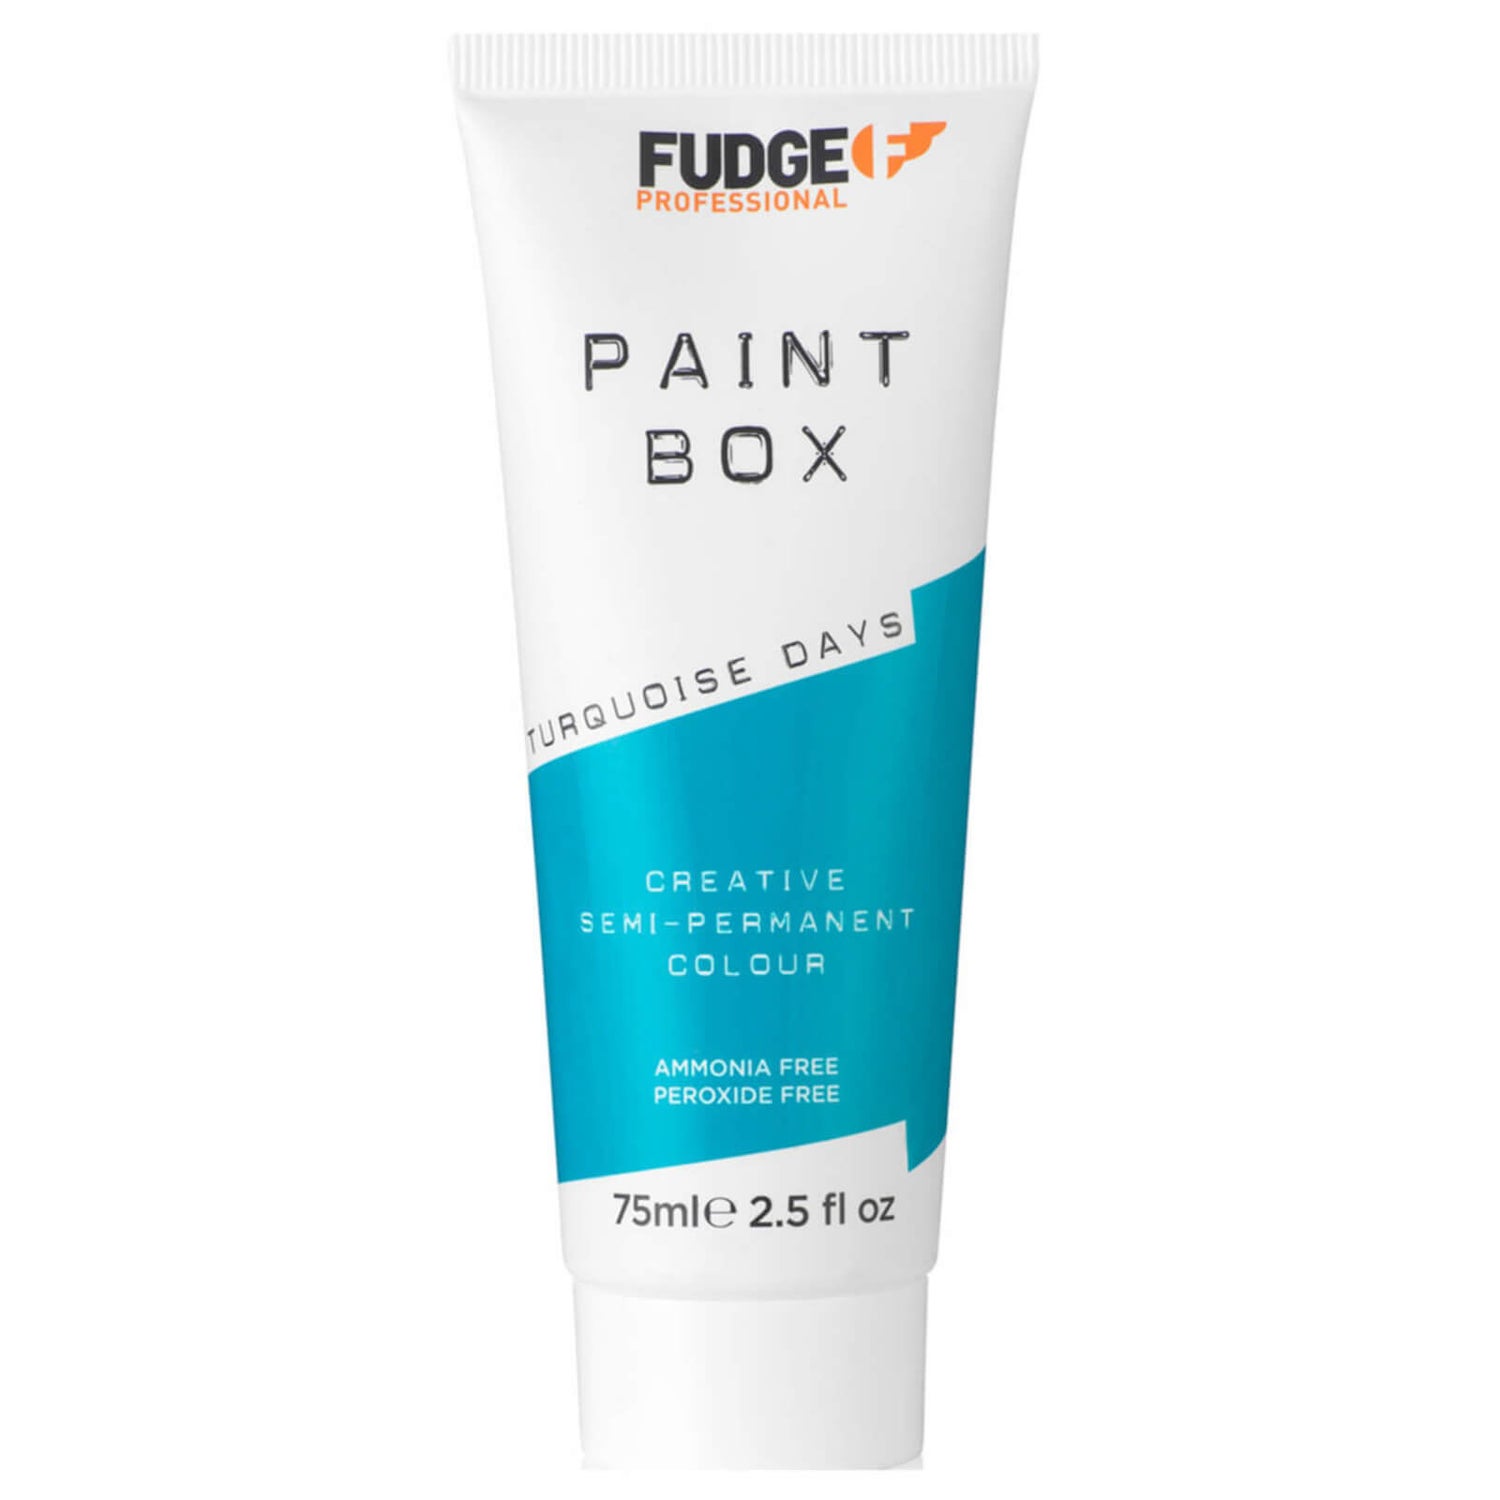 Fudge Paintbox Hair Colourant -hiusväri, 75ml, Turquoise Days